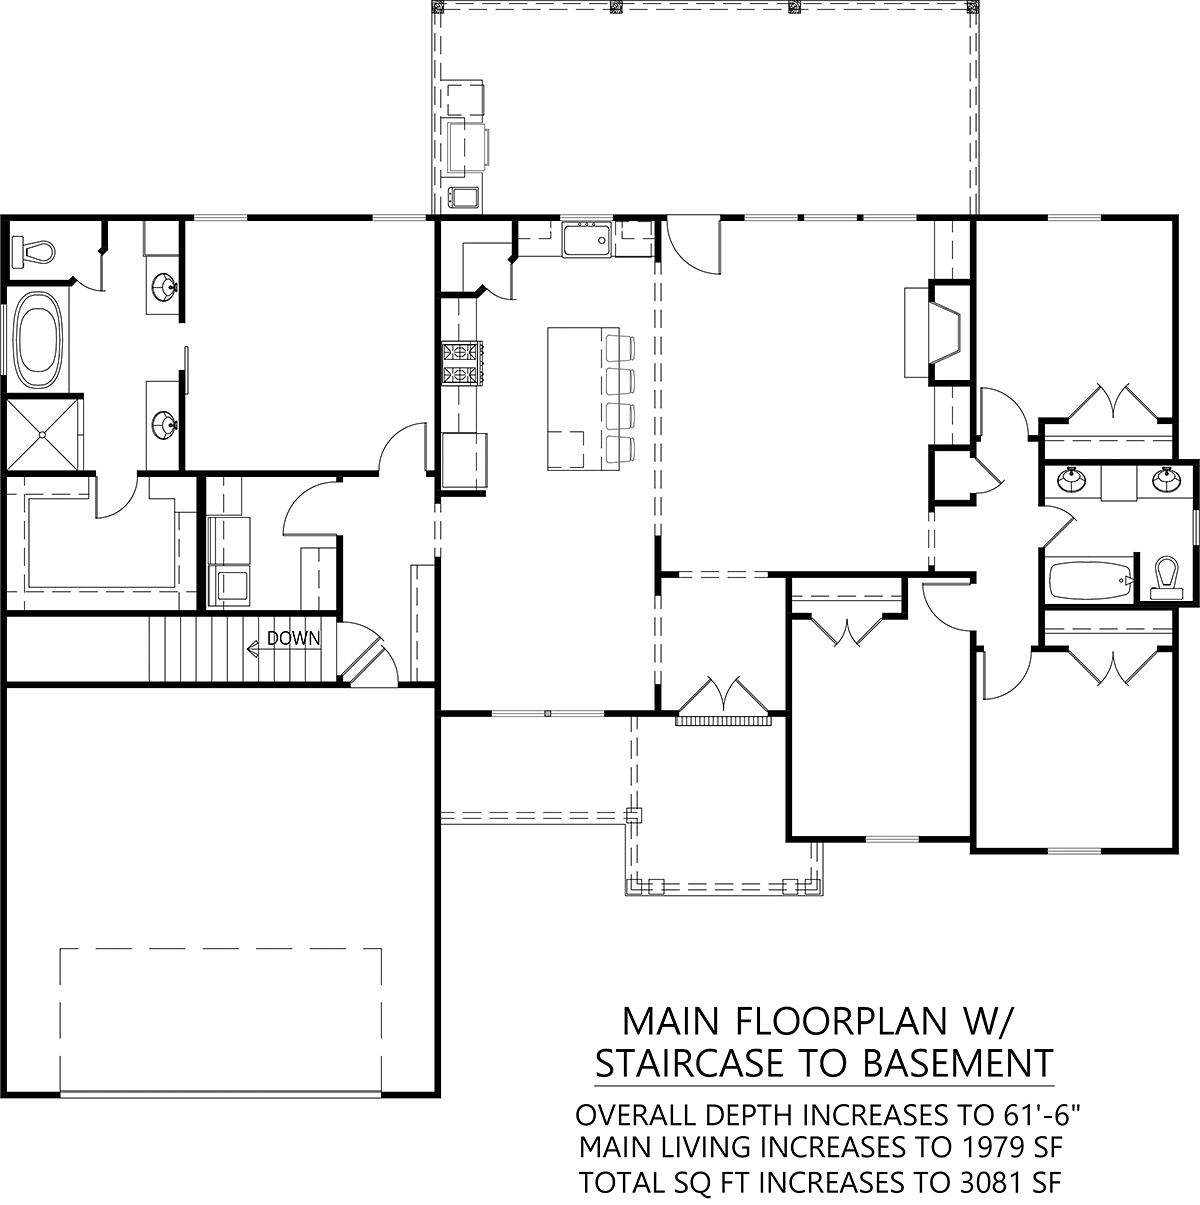 House Plan 41416 Alternate Level One